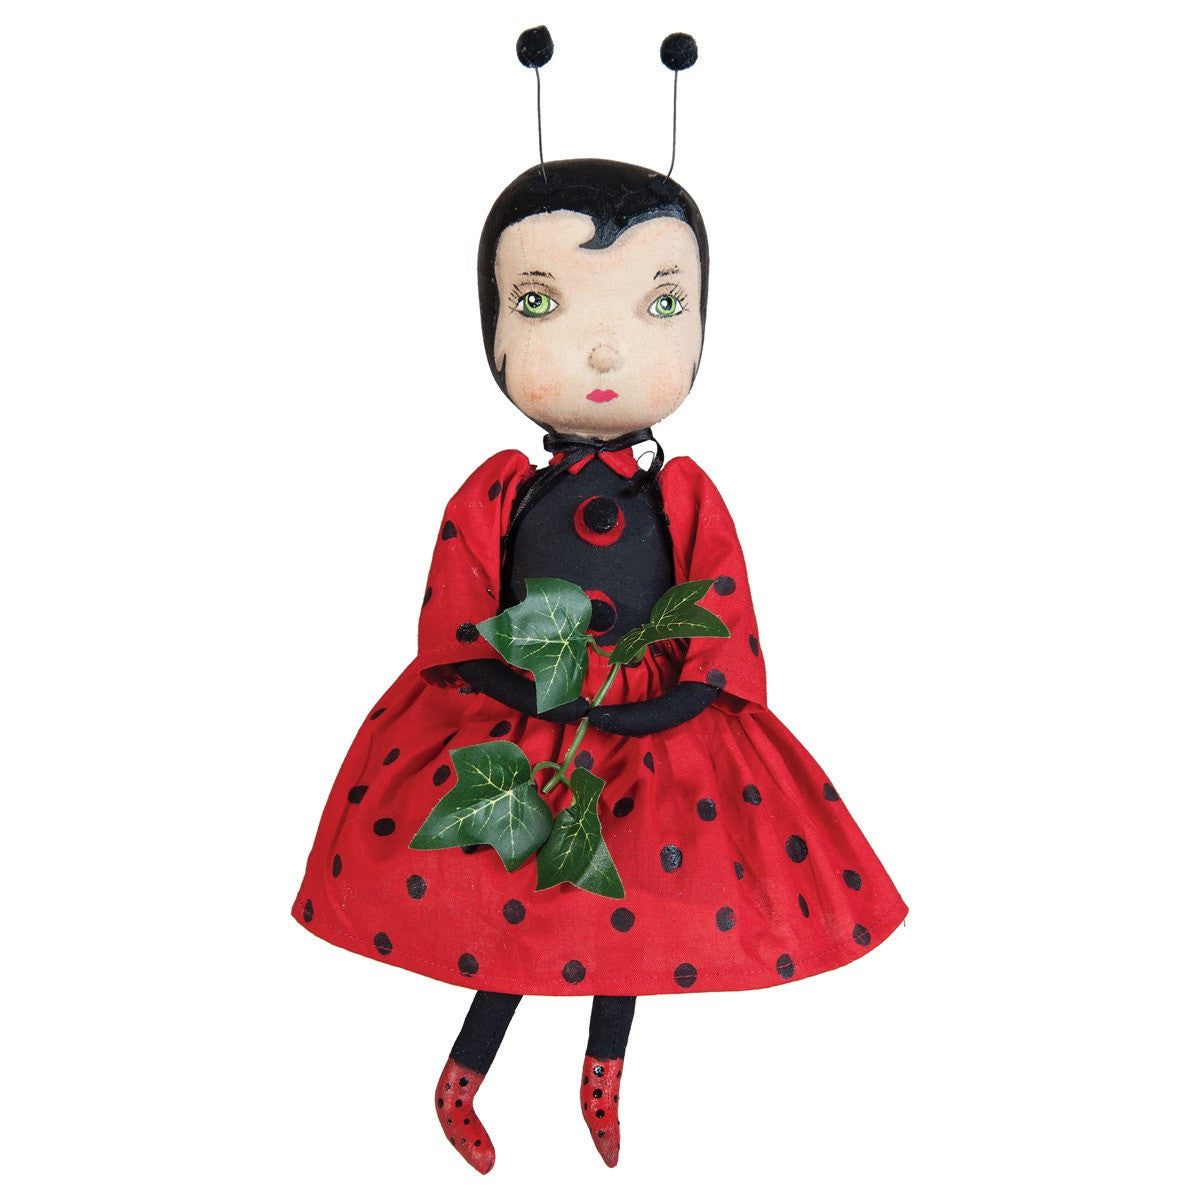 Cherry Ladybug Doll by Joe Spencer